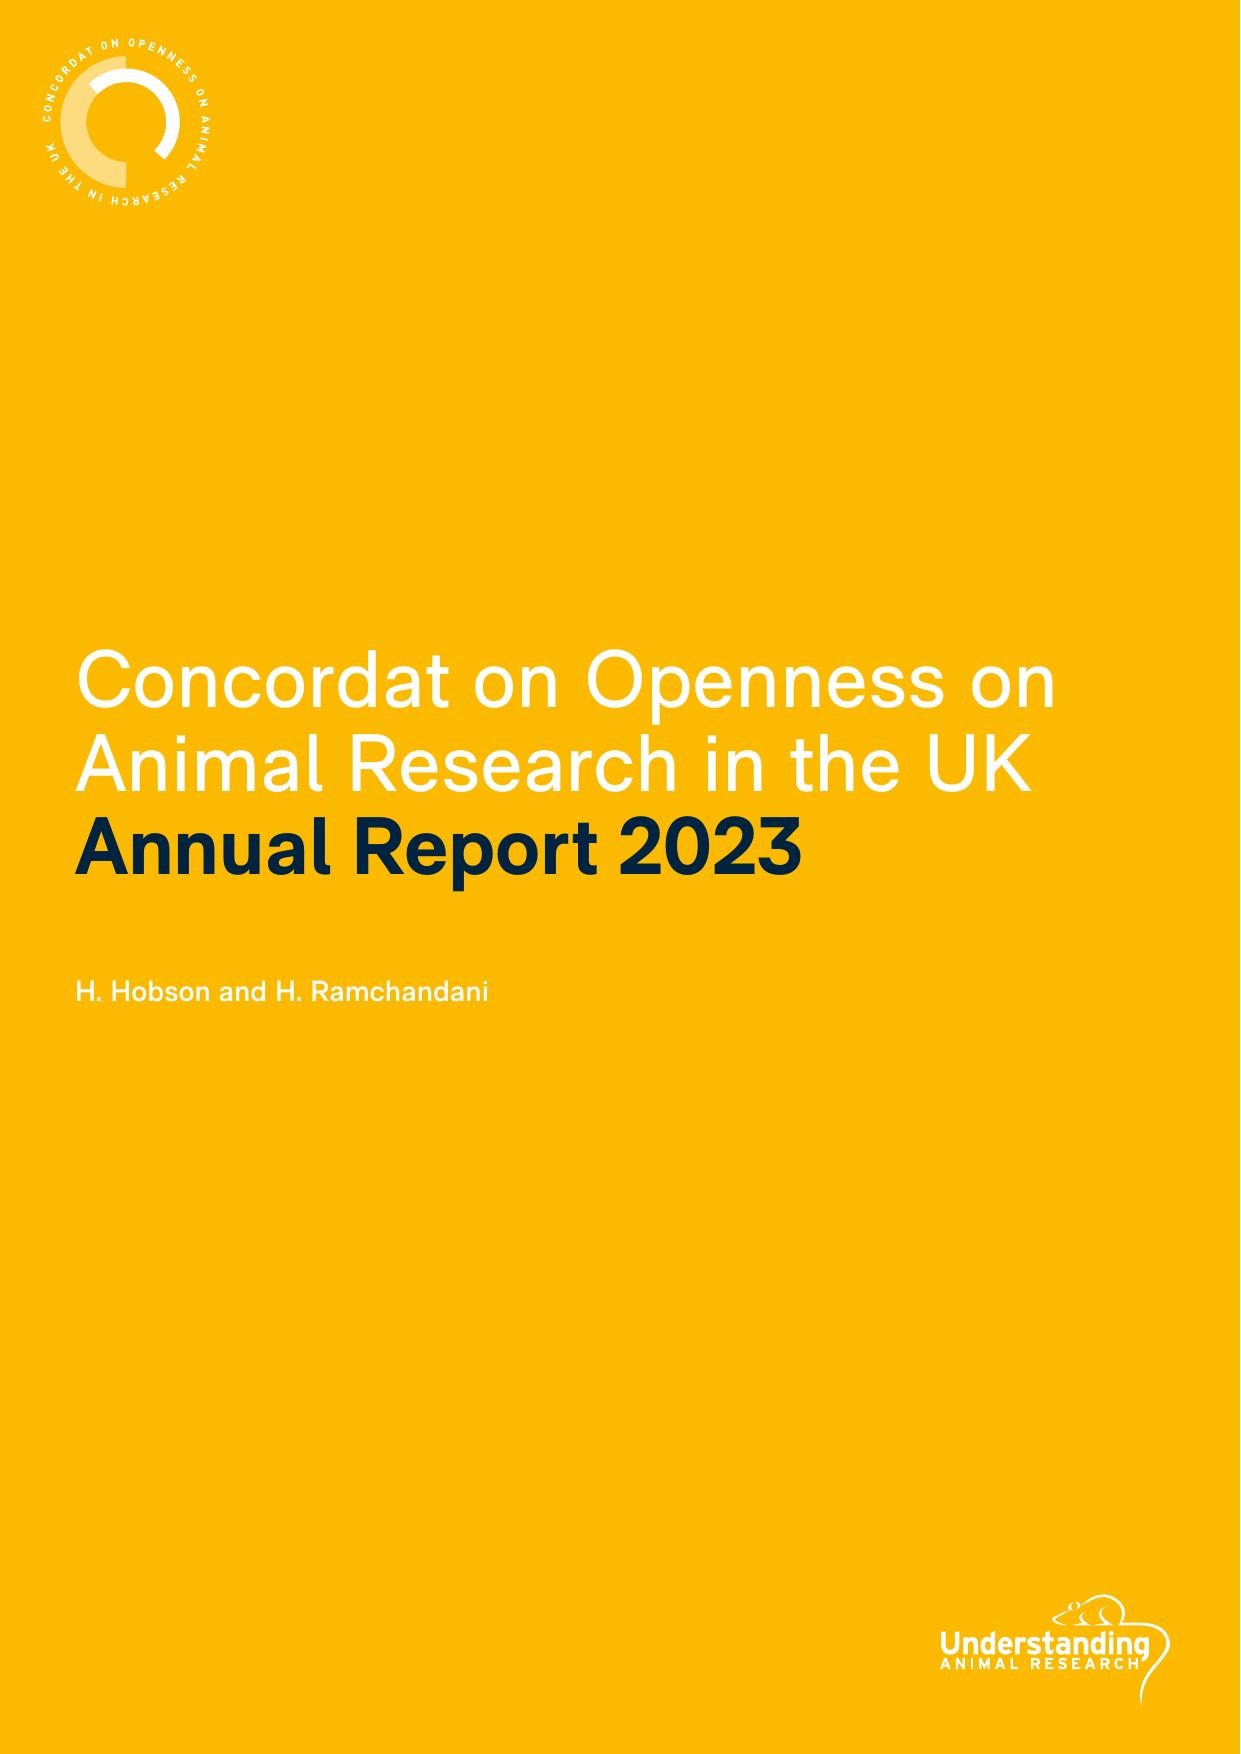 AIS-INC 2023 Annual Report